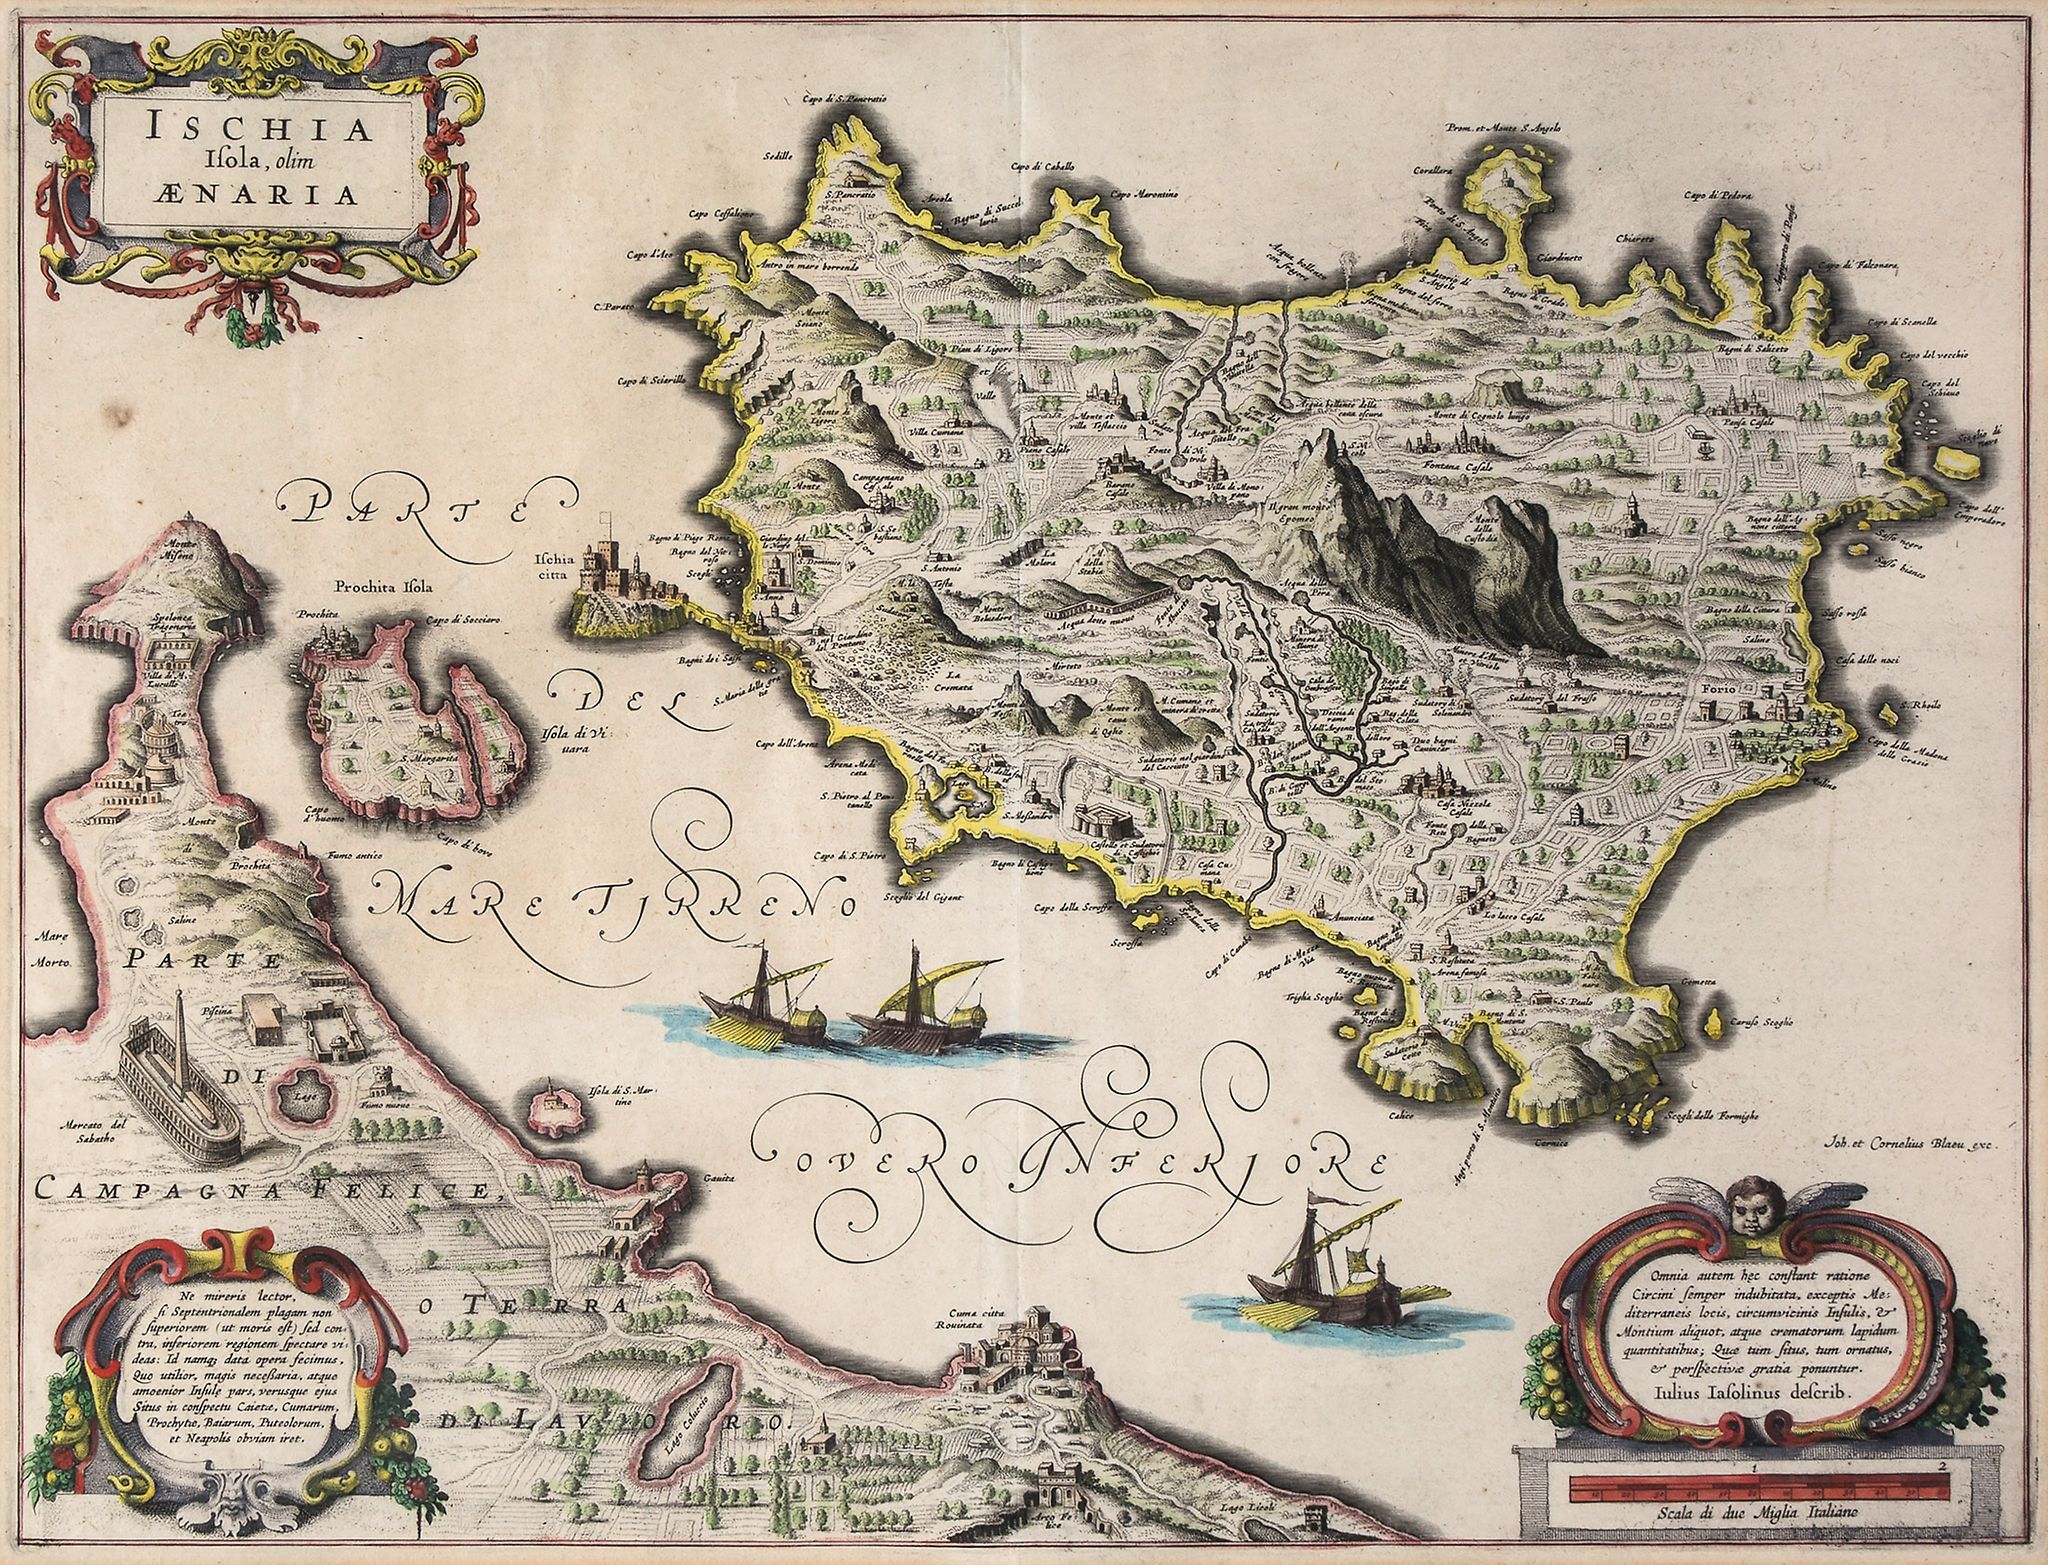 Italy.- Blaeu (Johannes) - Ischia Isola, olim Aenaria the Island of Ischia with the Peninsula of